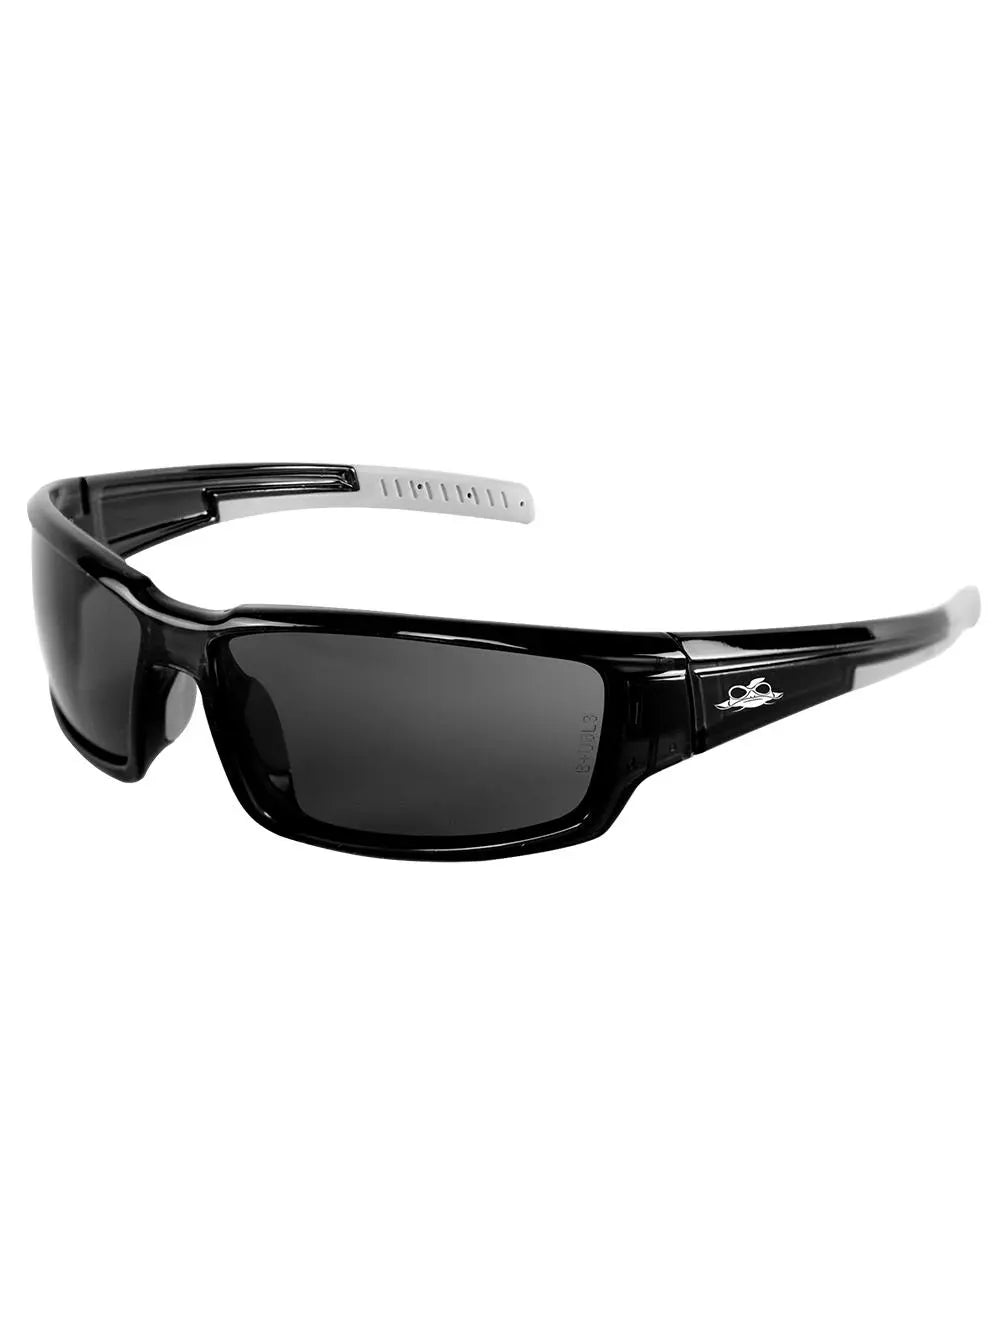 BULLHEAD SAFETY - Gafas de seguridad antivaho Maki, humo/negro cristal